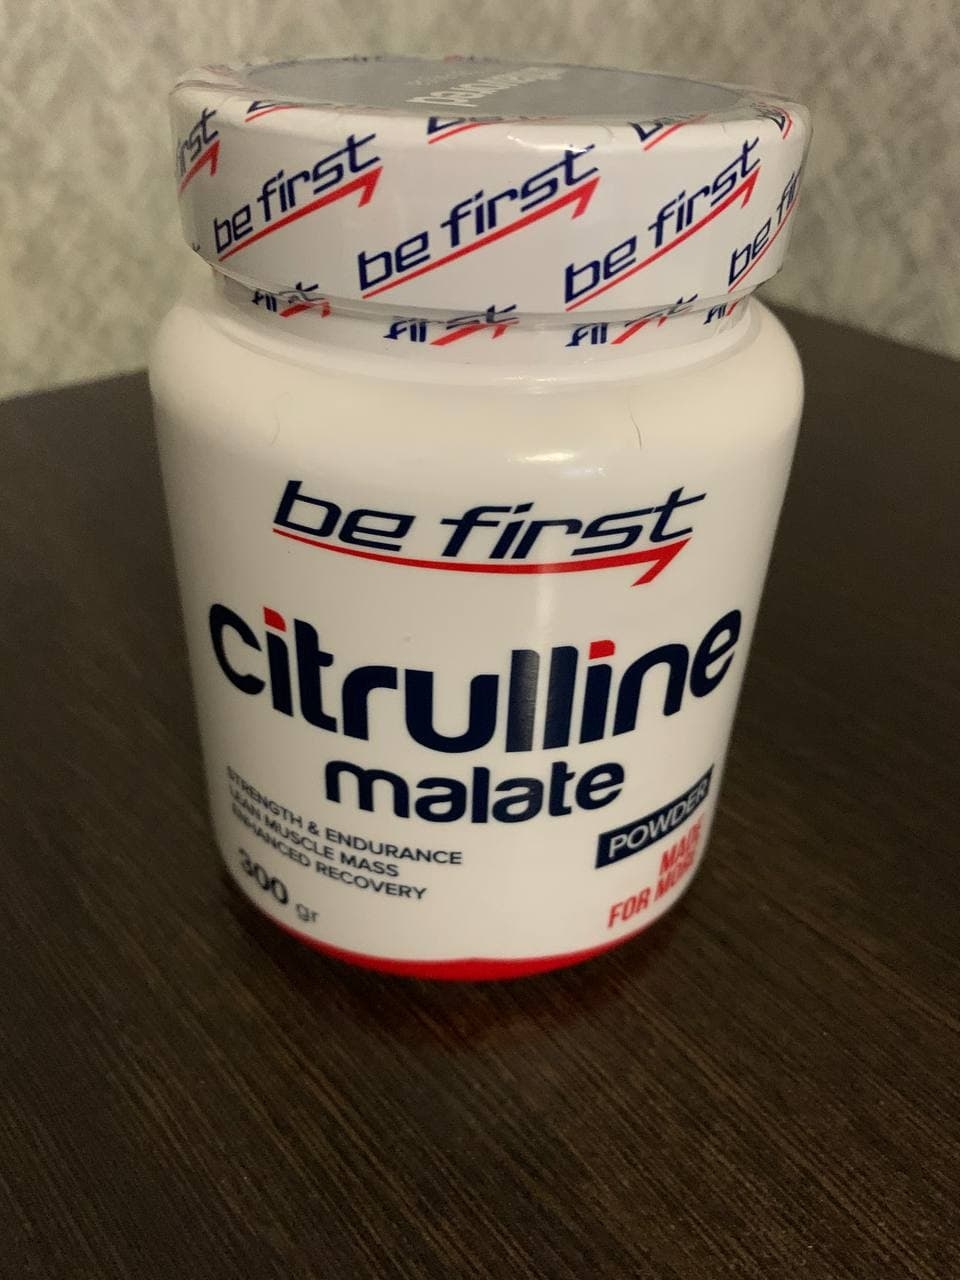 Be first Citrulline Malate Powder - Не хуже чем у западных производителей